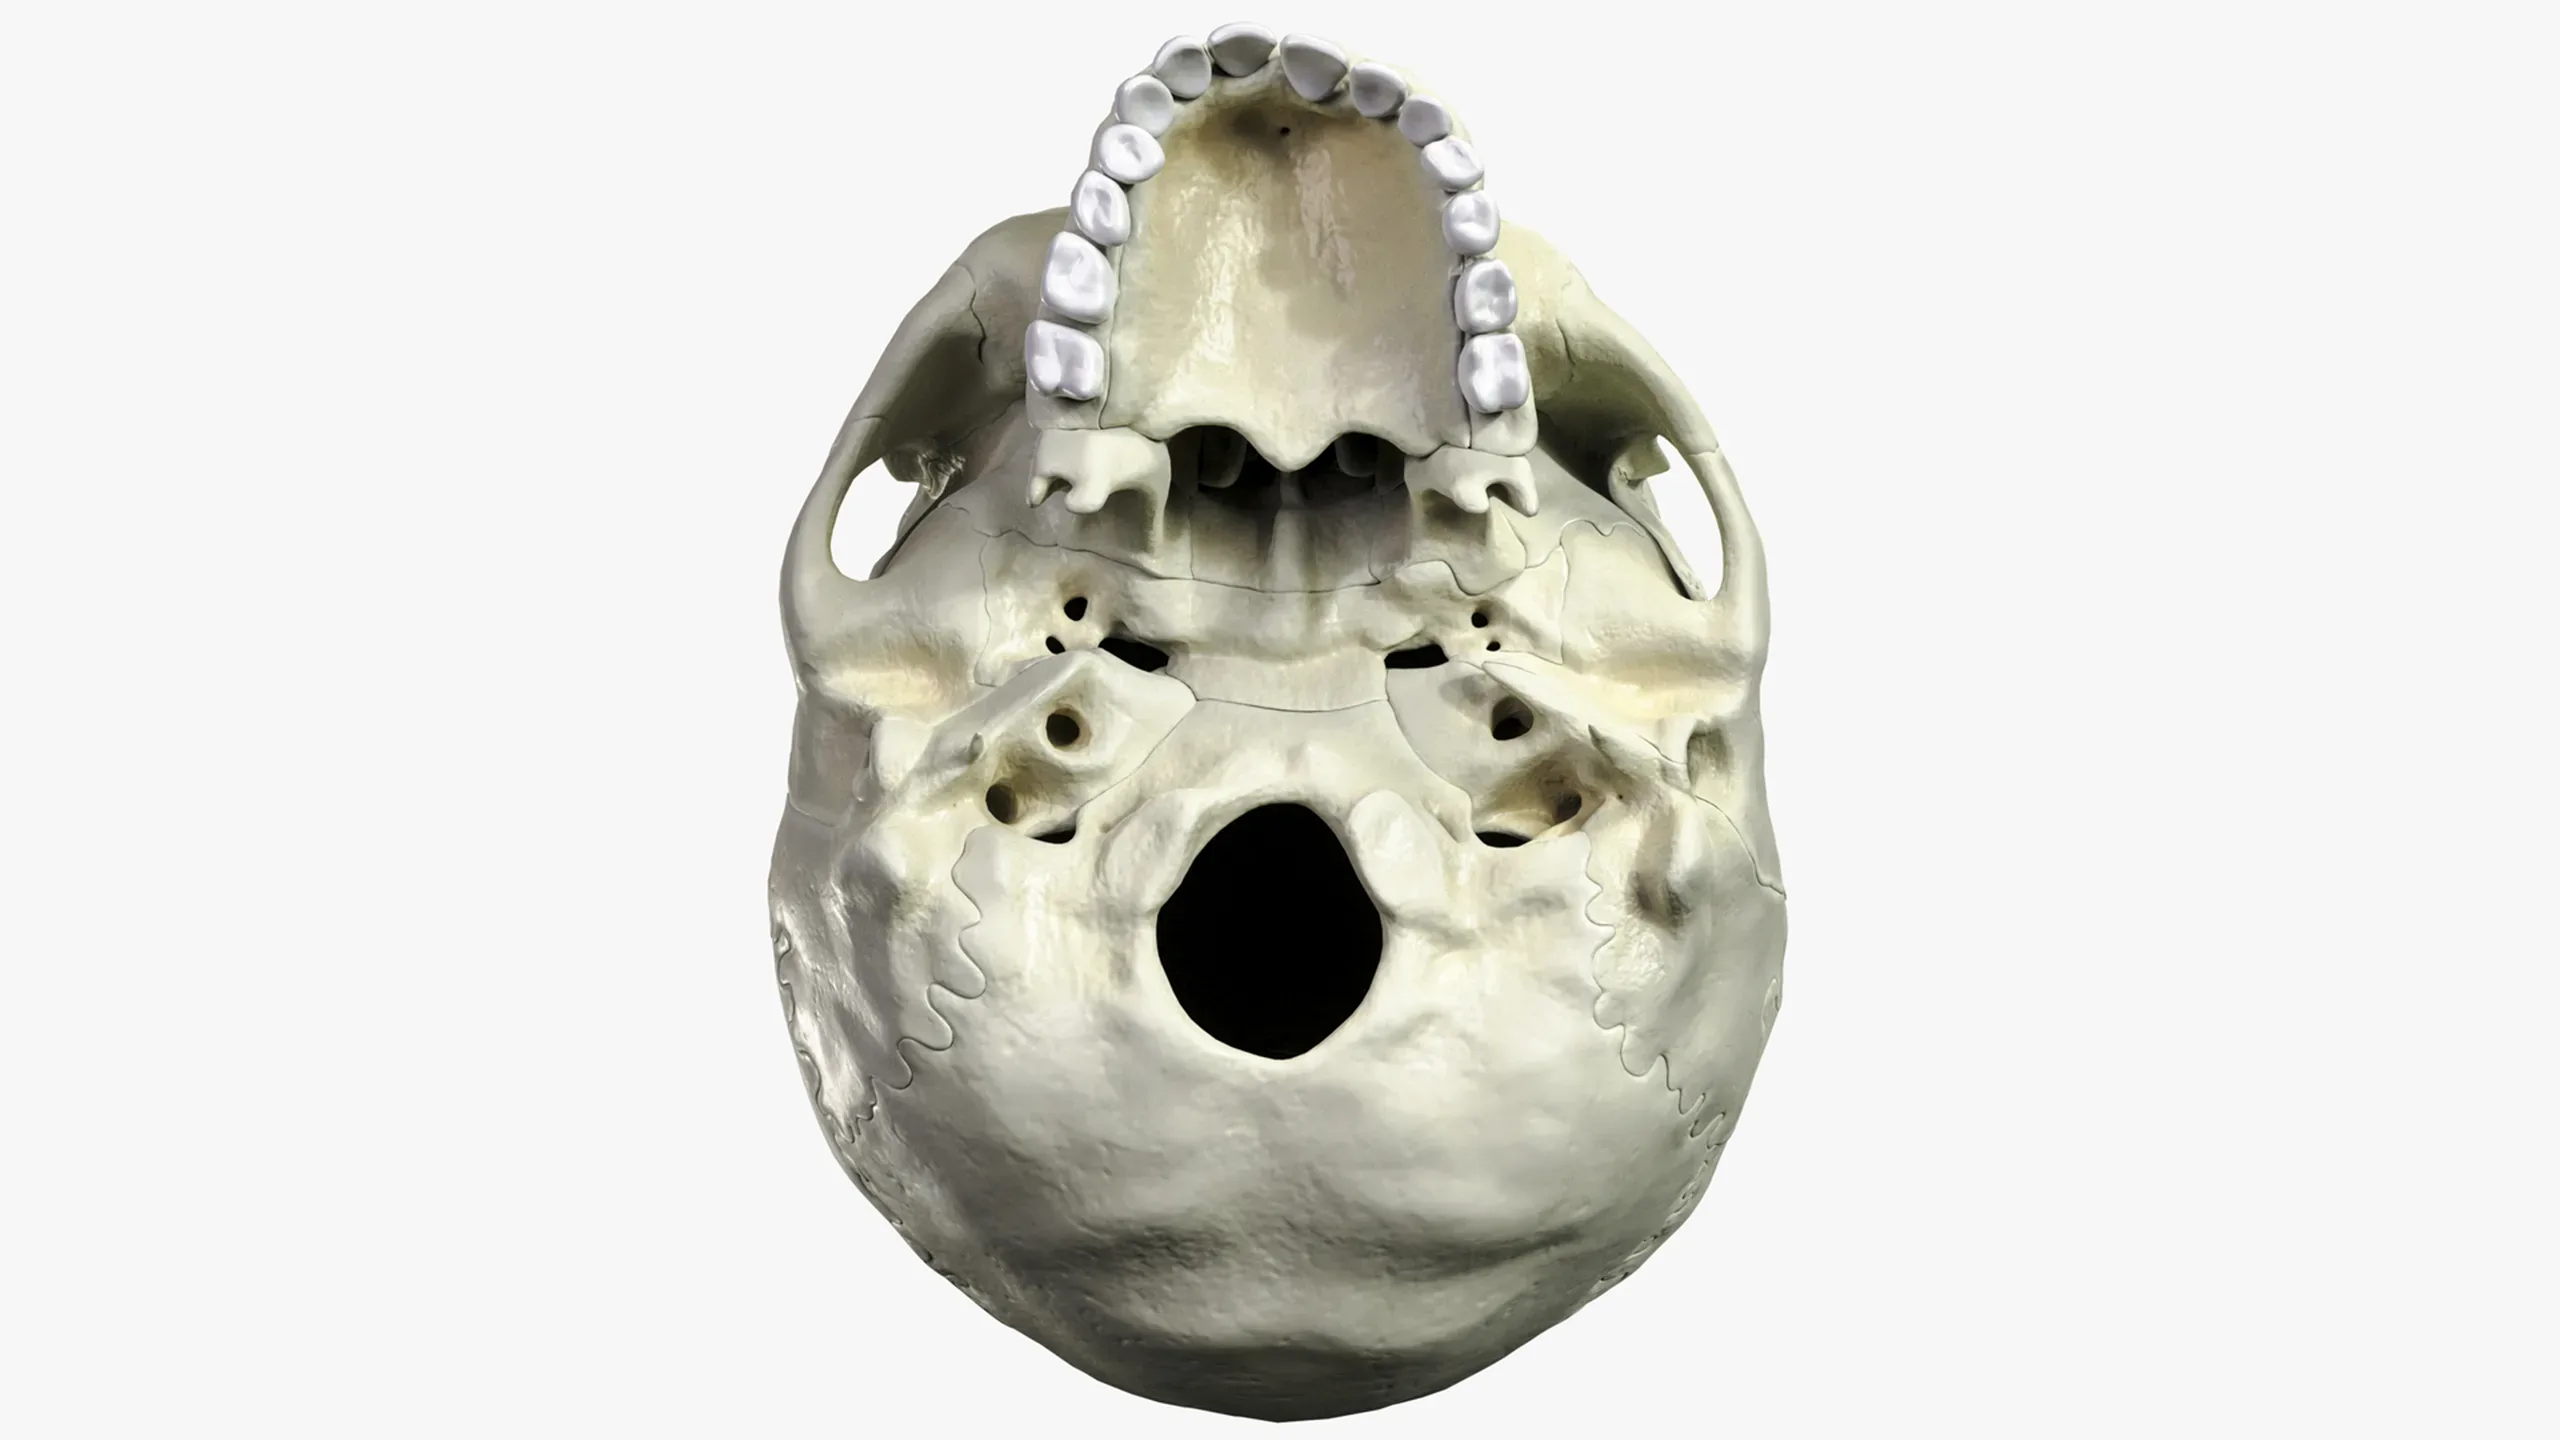 Anatomical atlas of the human skull